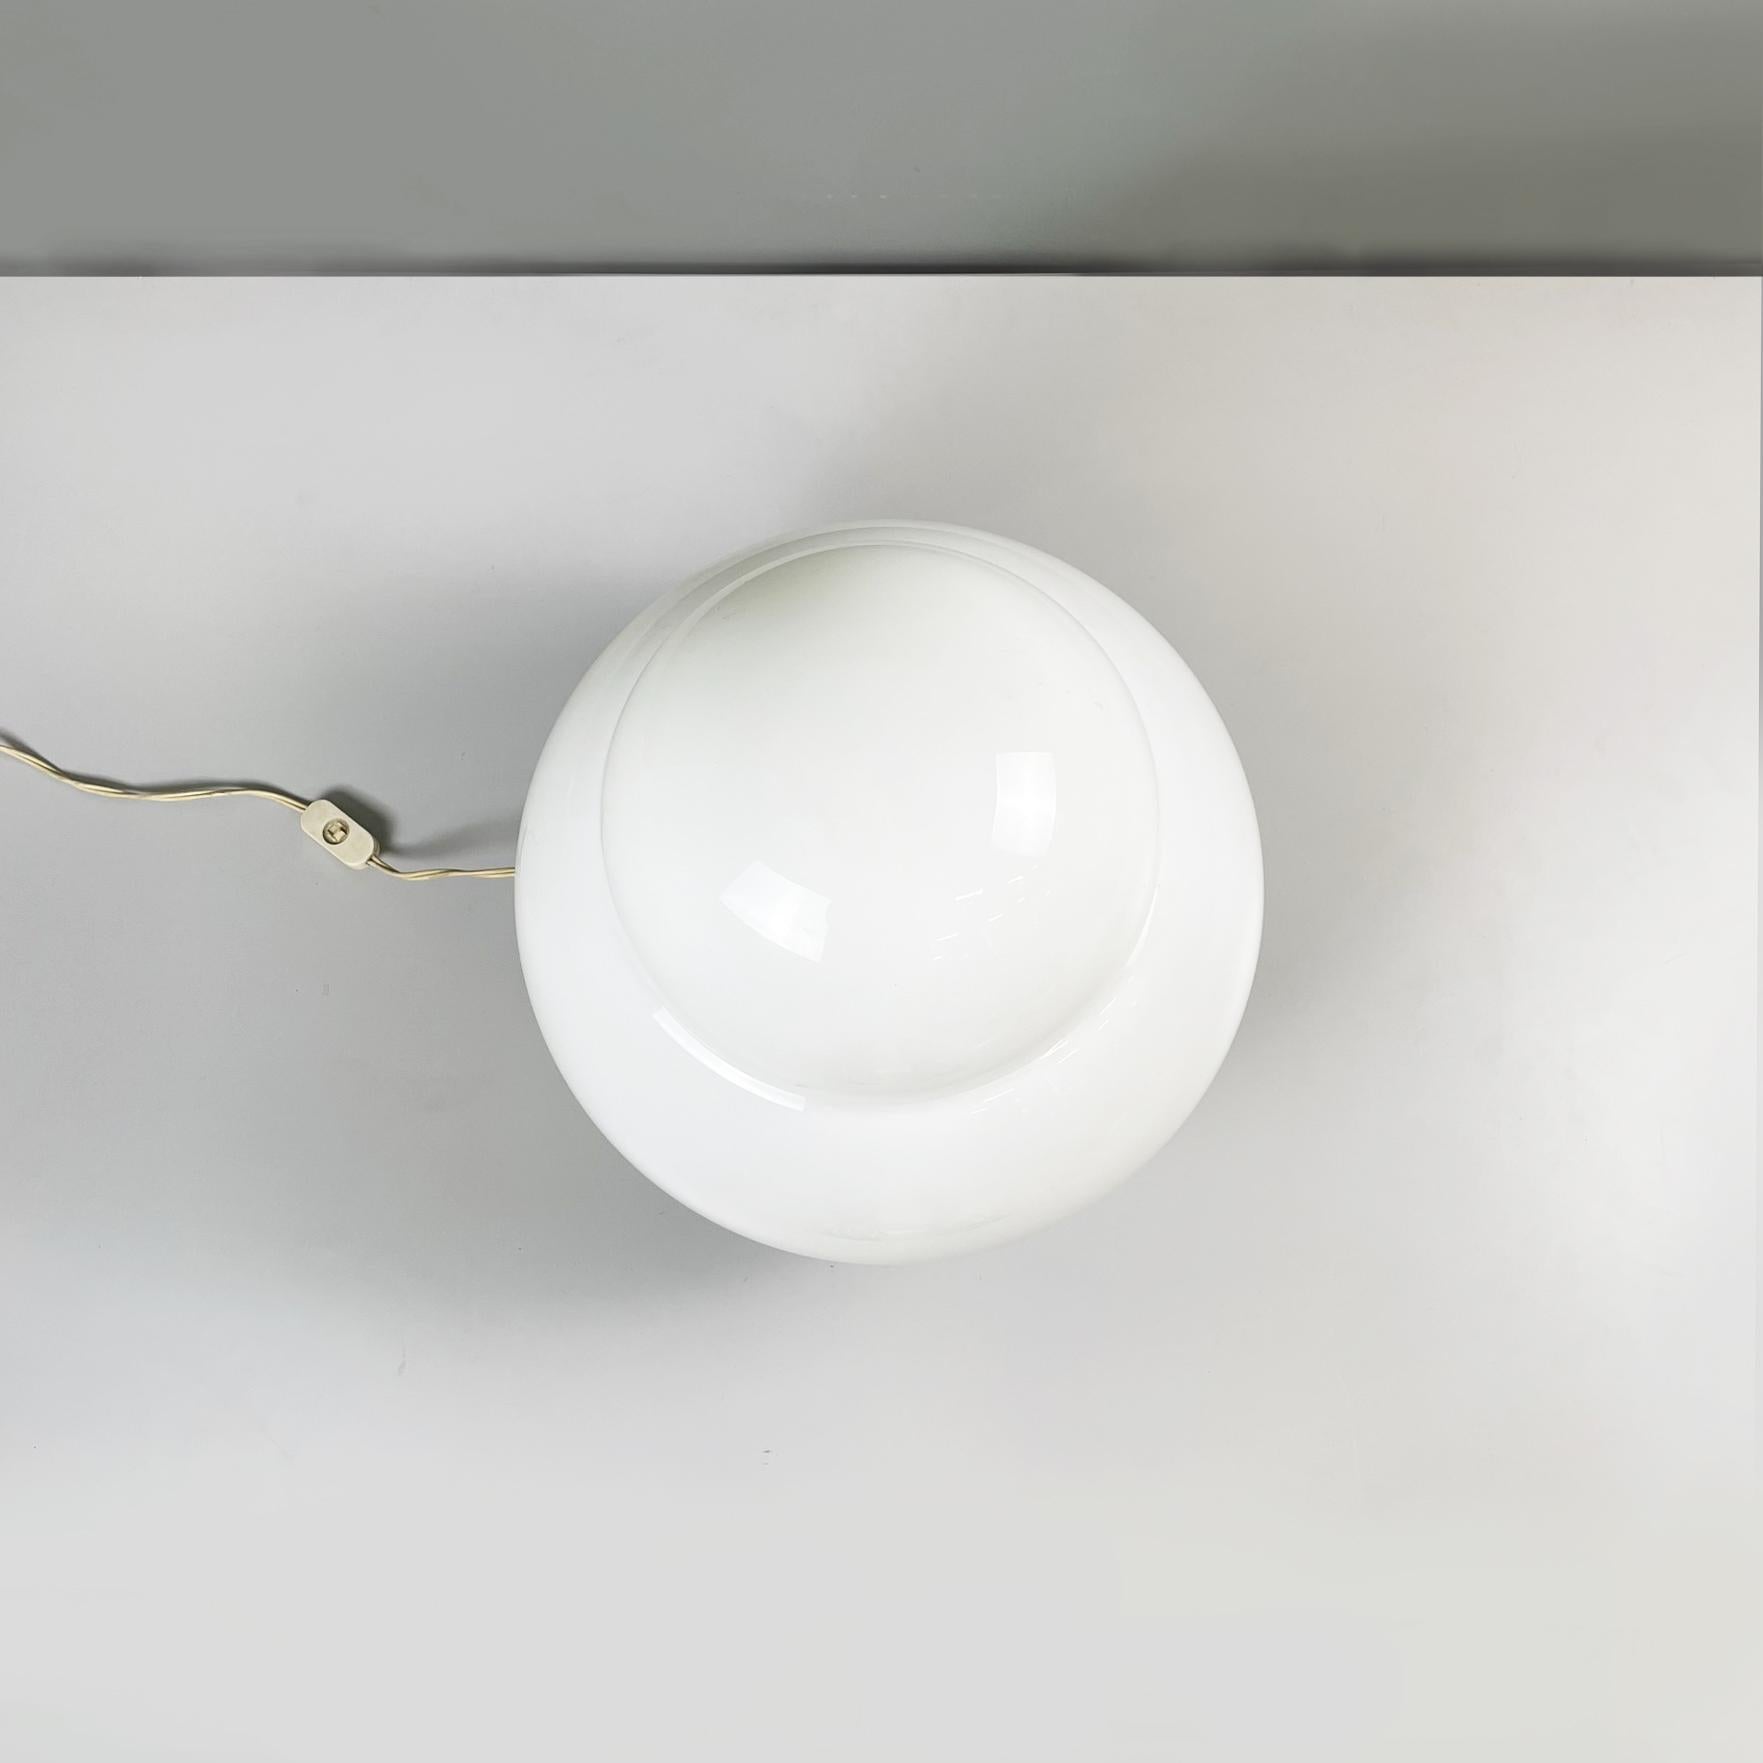 Late 20th Century Italian Modern Opaline Glass Table Lamp Daruma by Asti for Fontana Arte, 1970s For Sale